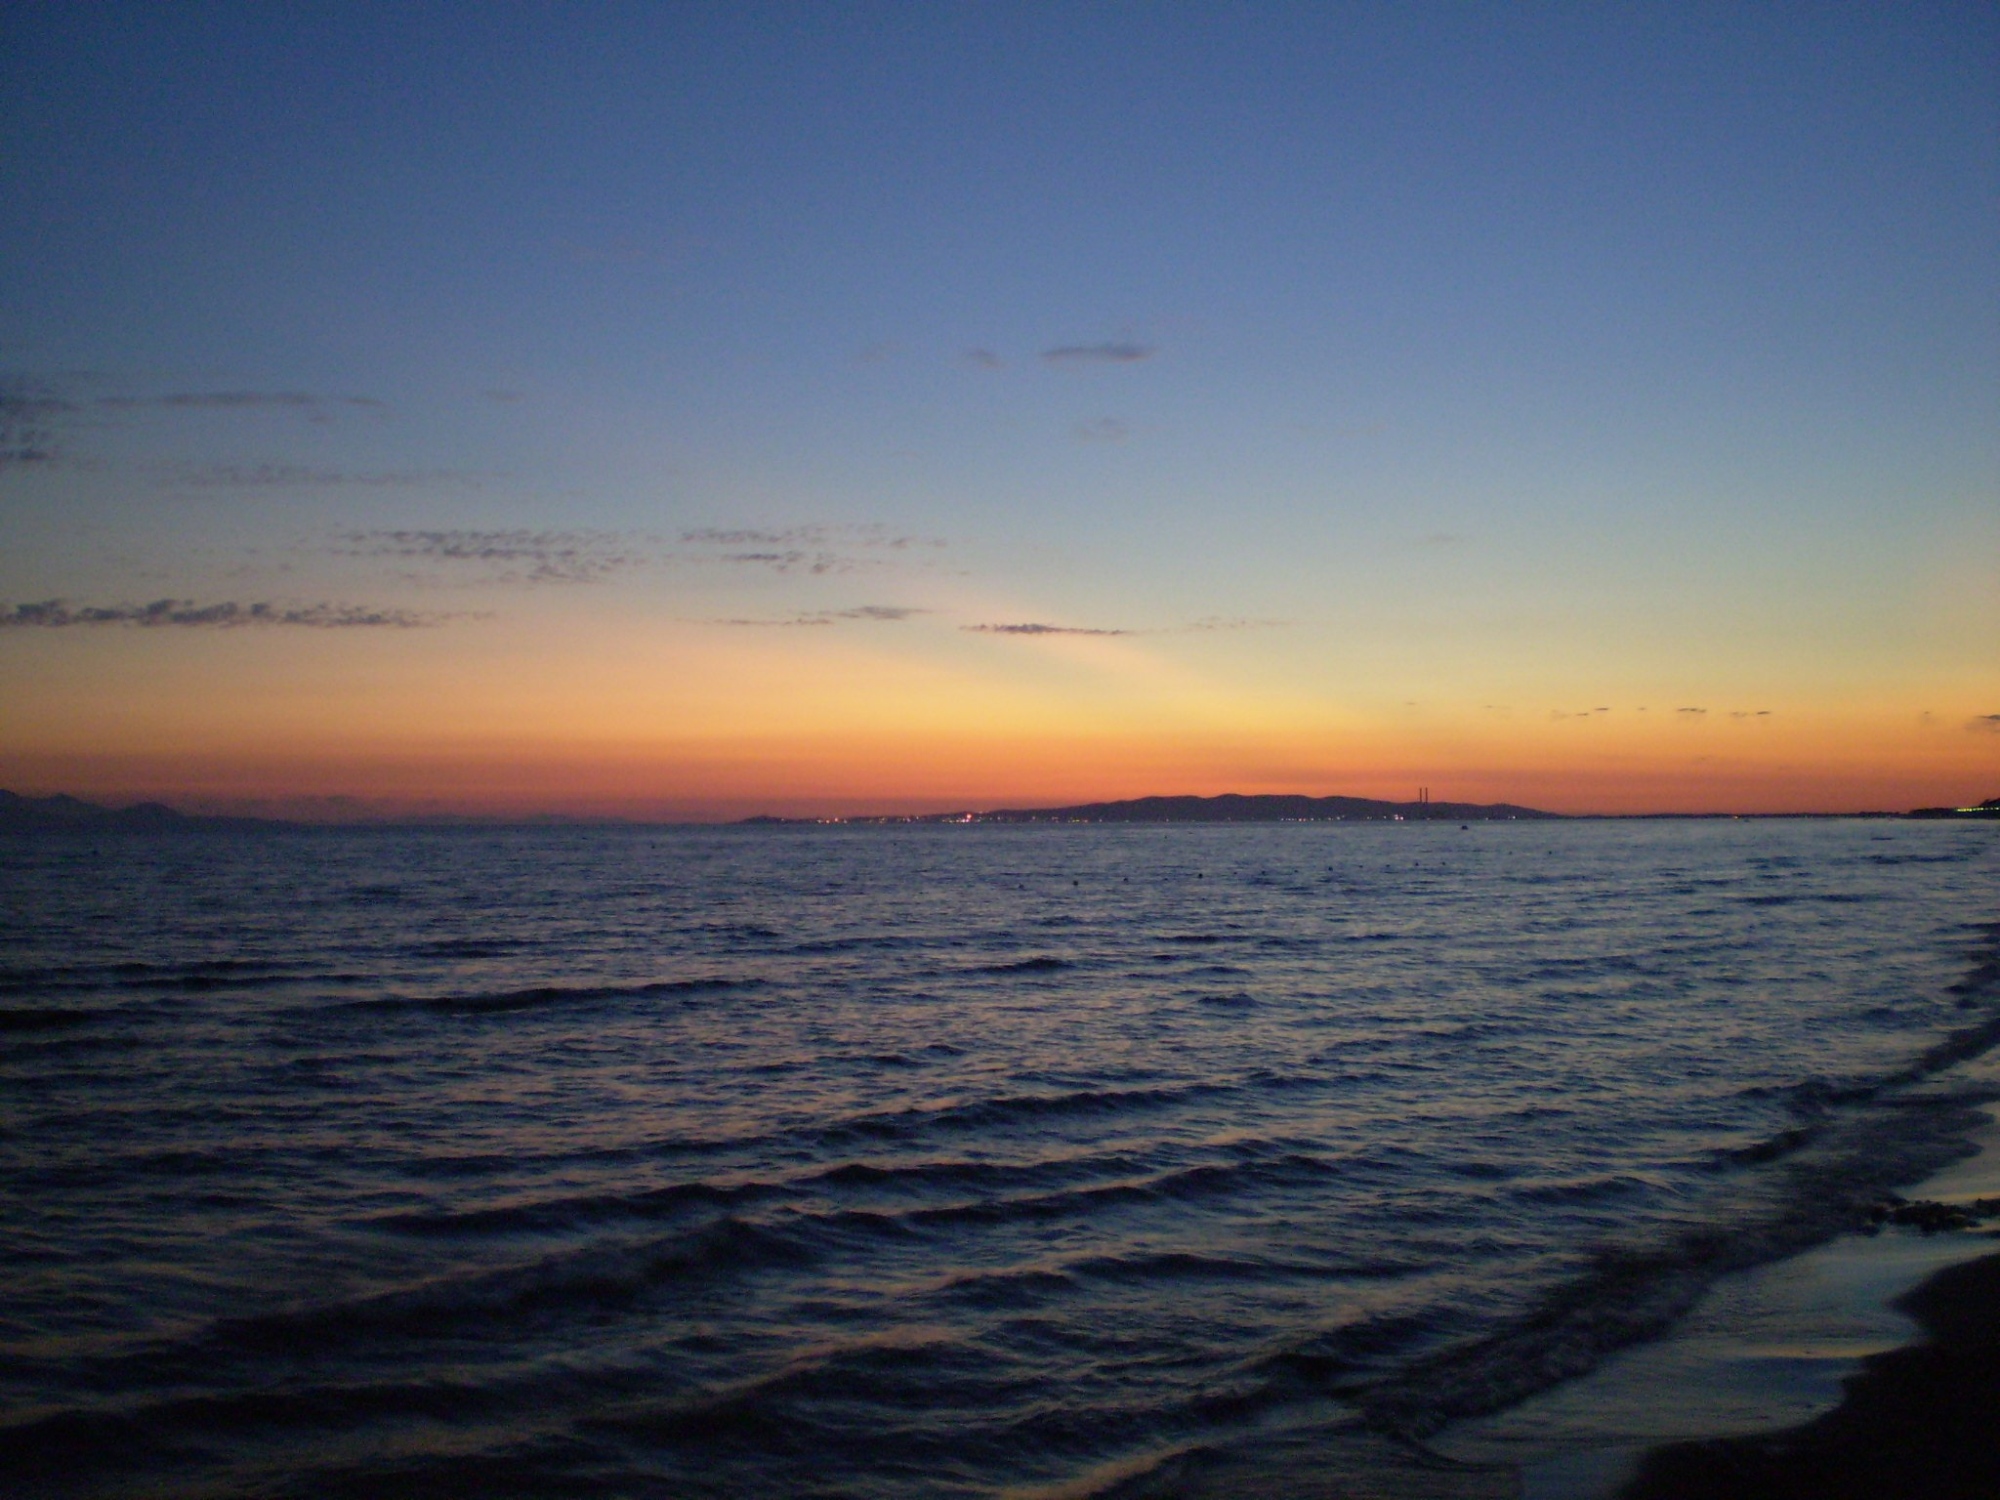 Sunset at the Pratoranieri beach in Follonica